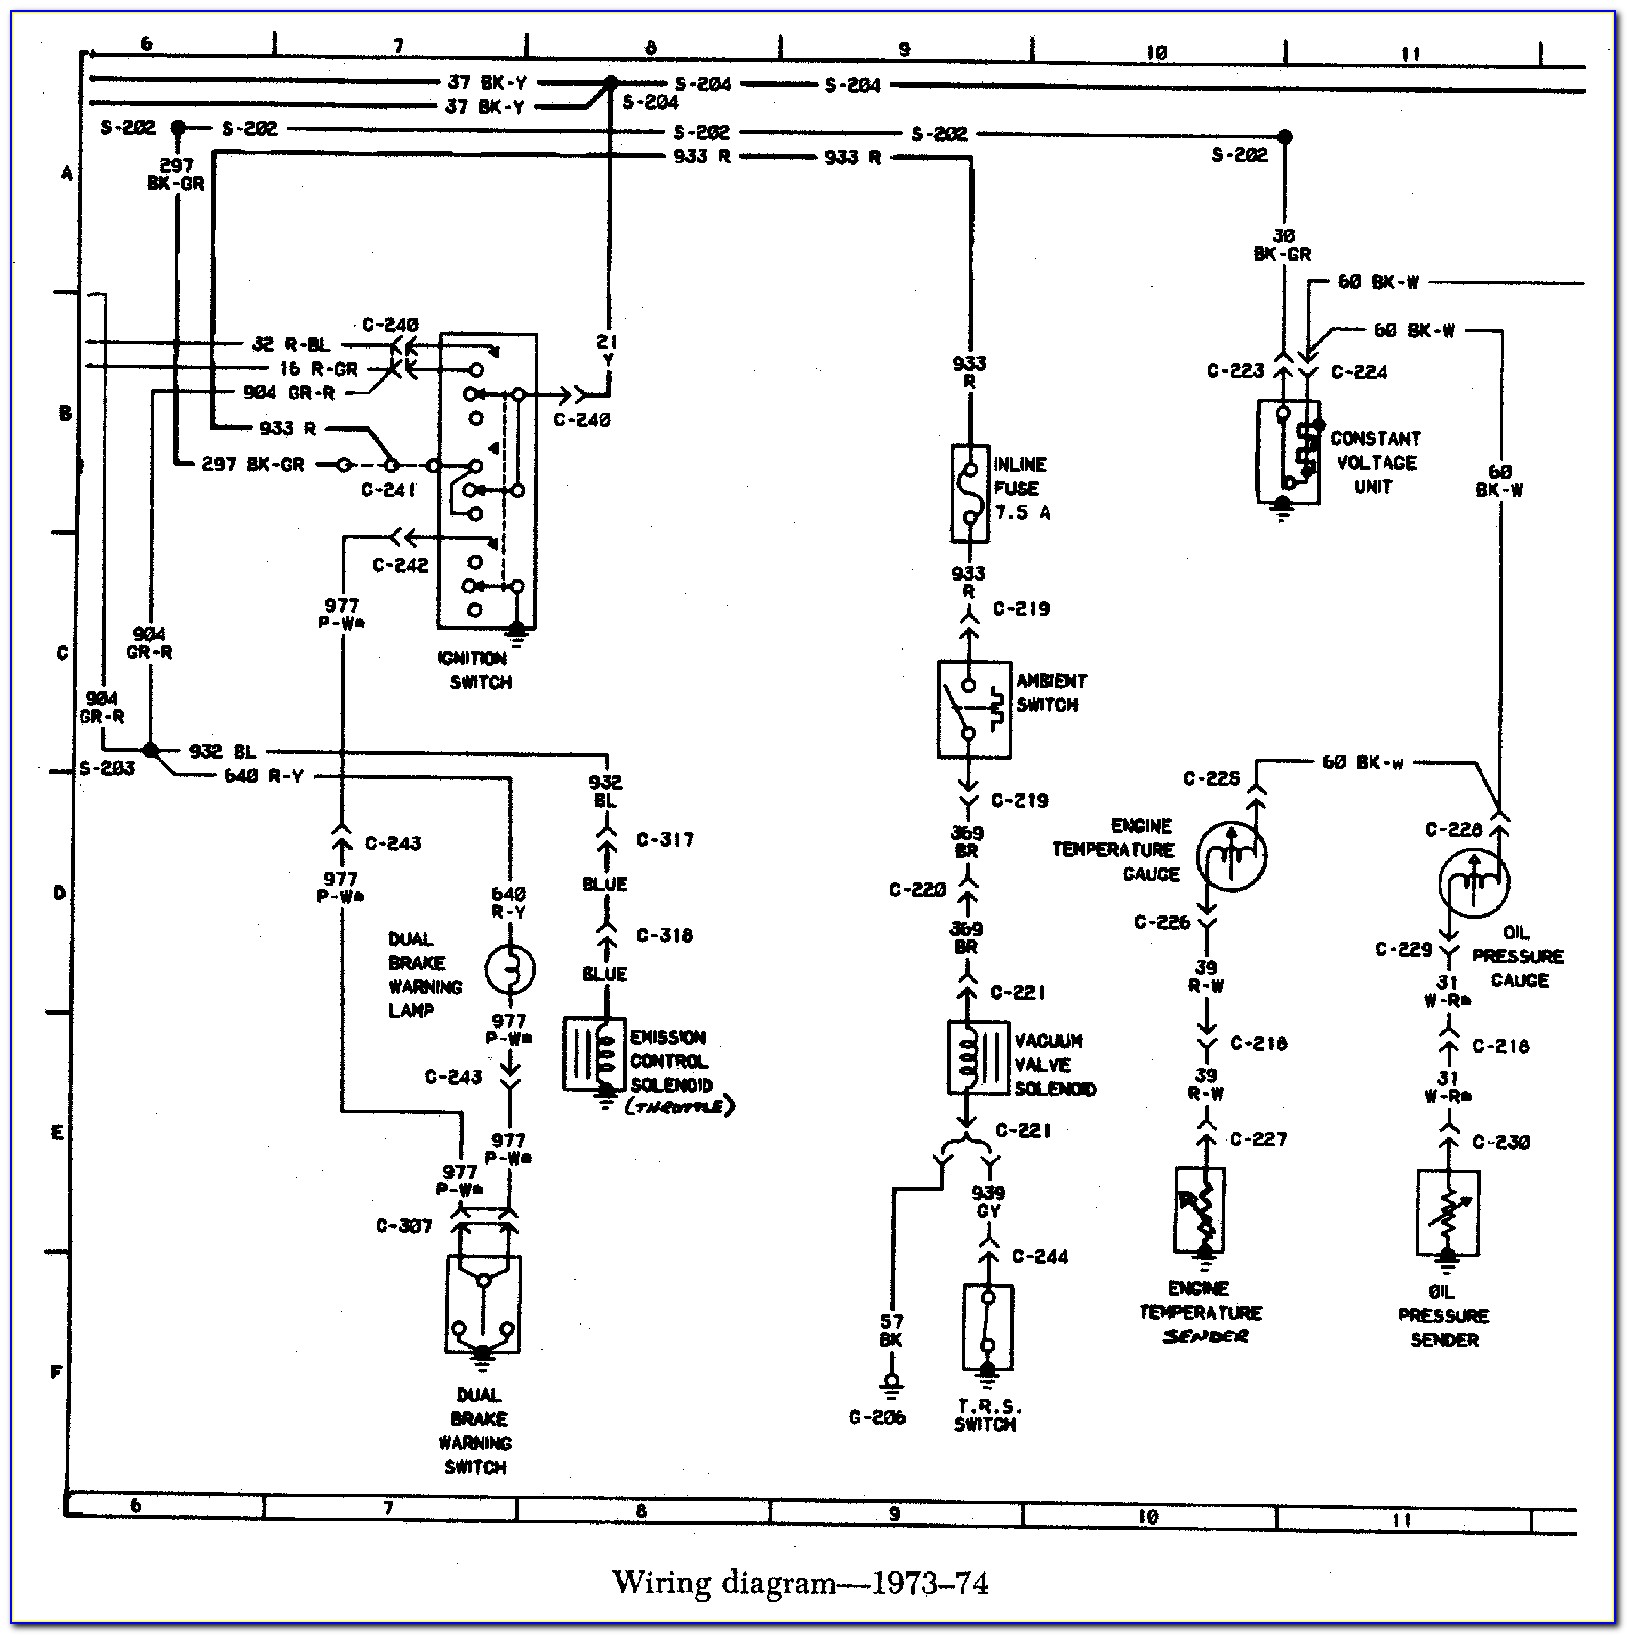 Early Bronco Centech Wiring Diagram